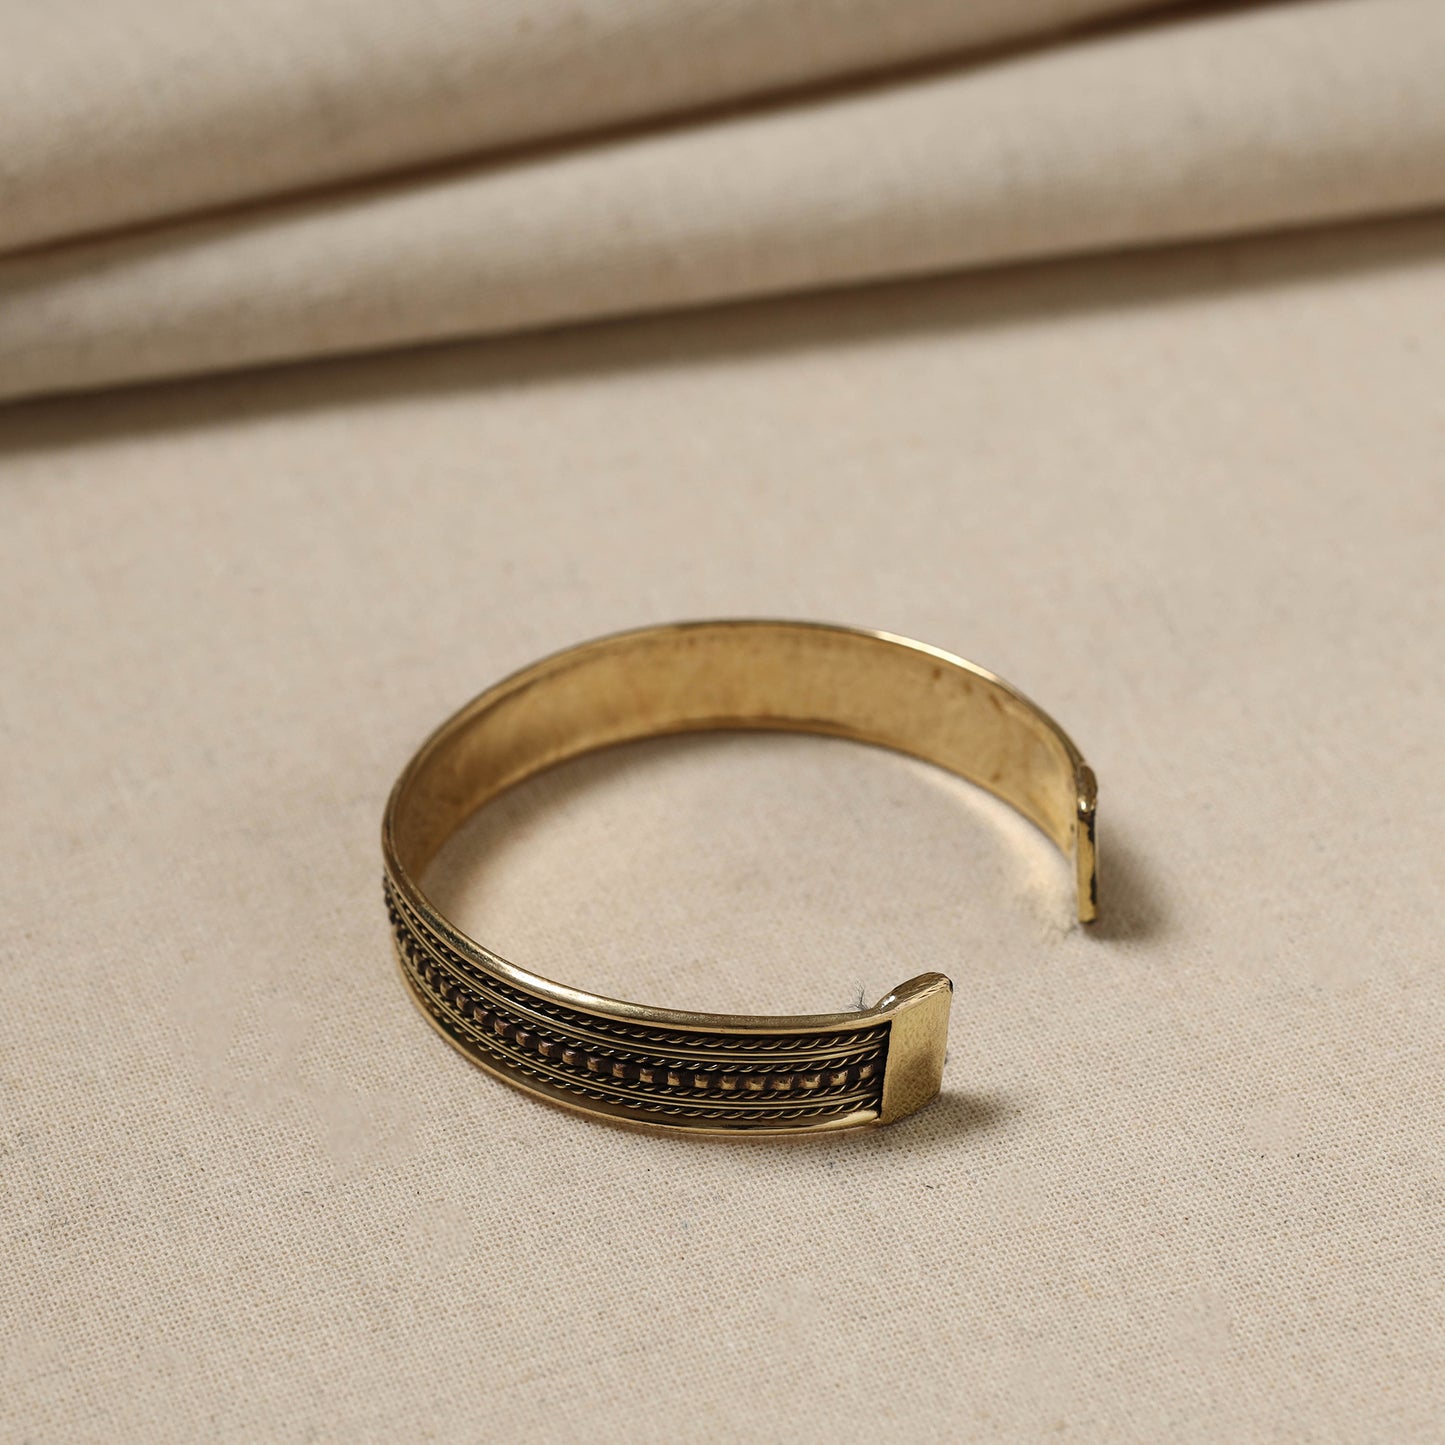 Antique Finish Oxidised German Silver Bangle / Cuff Bracelet (Adjustable) 2